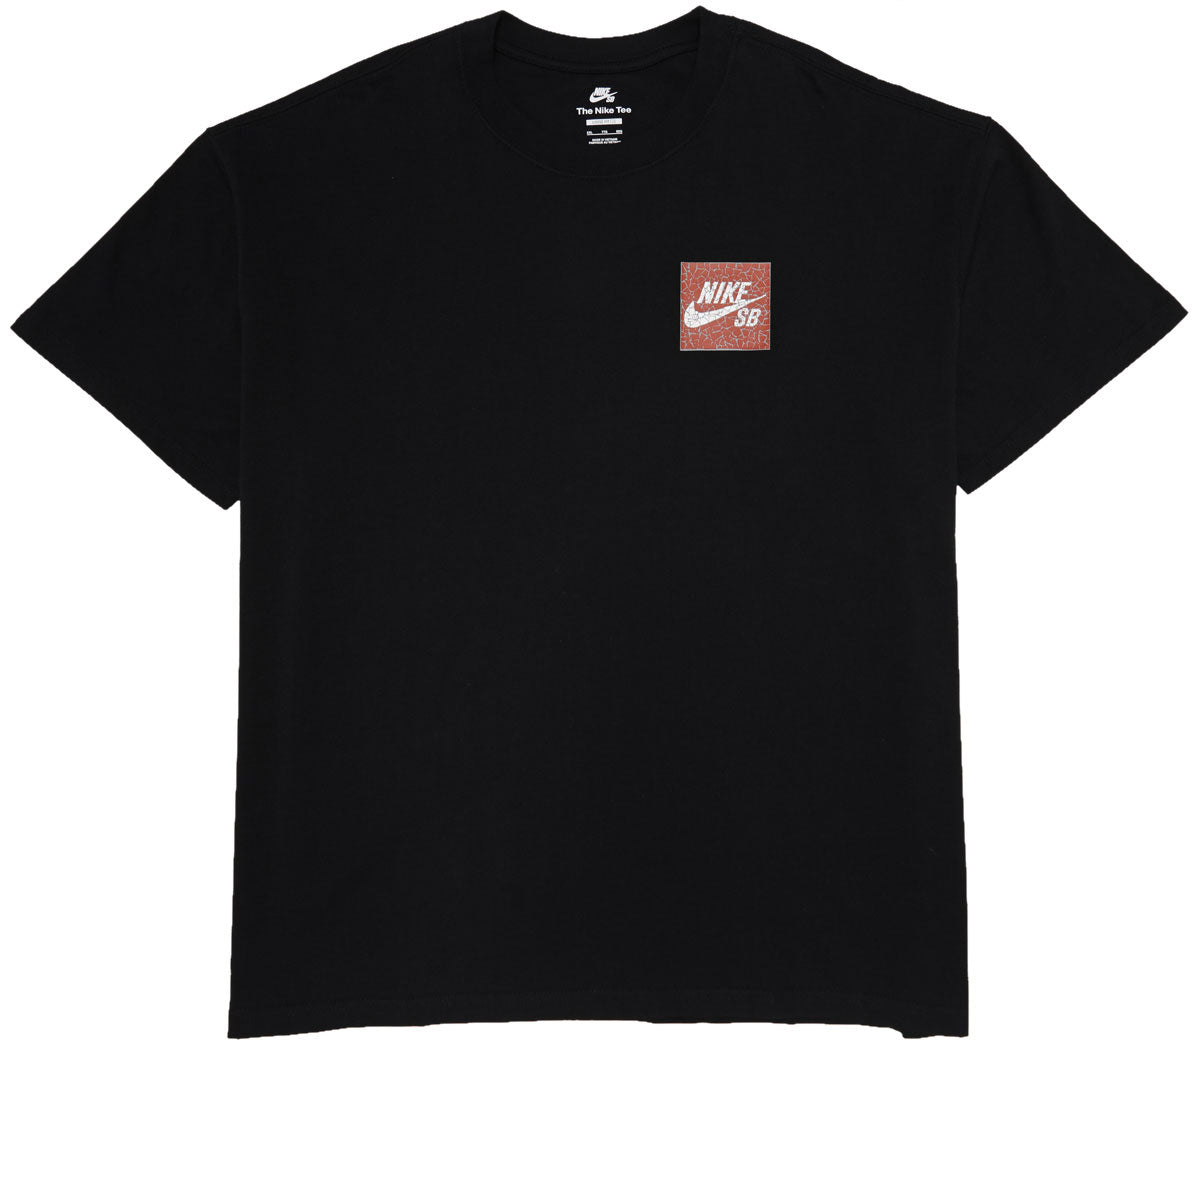 Nike SB Mosaic T-Shirt - Black image 2